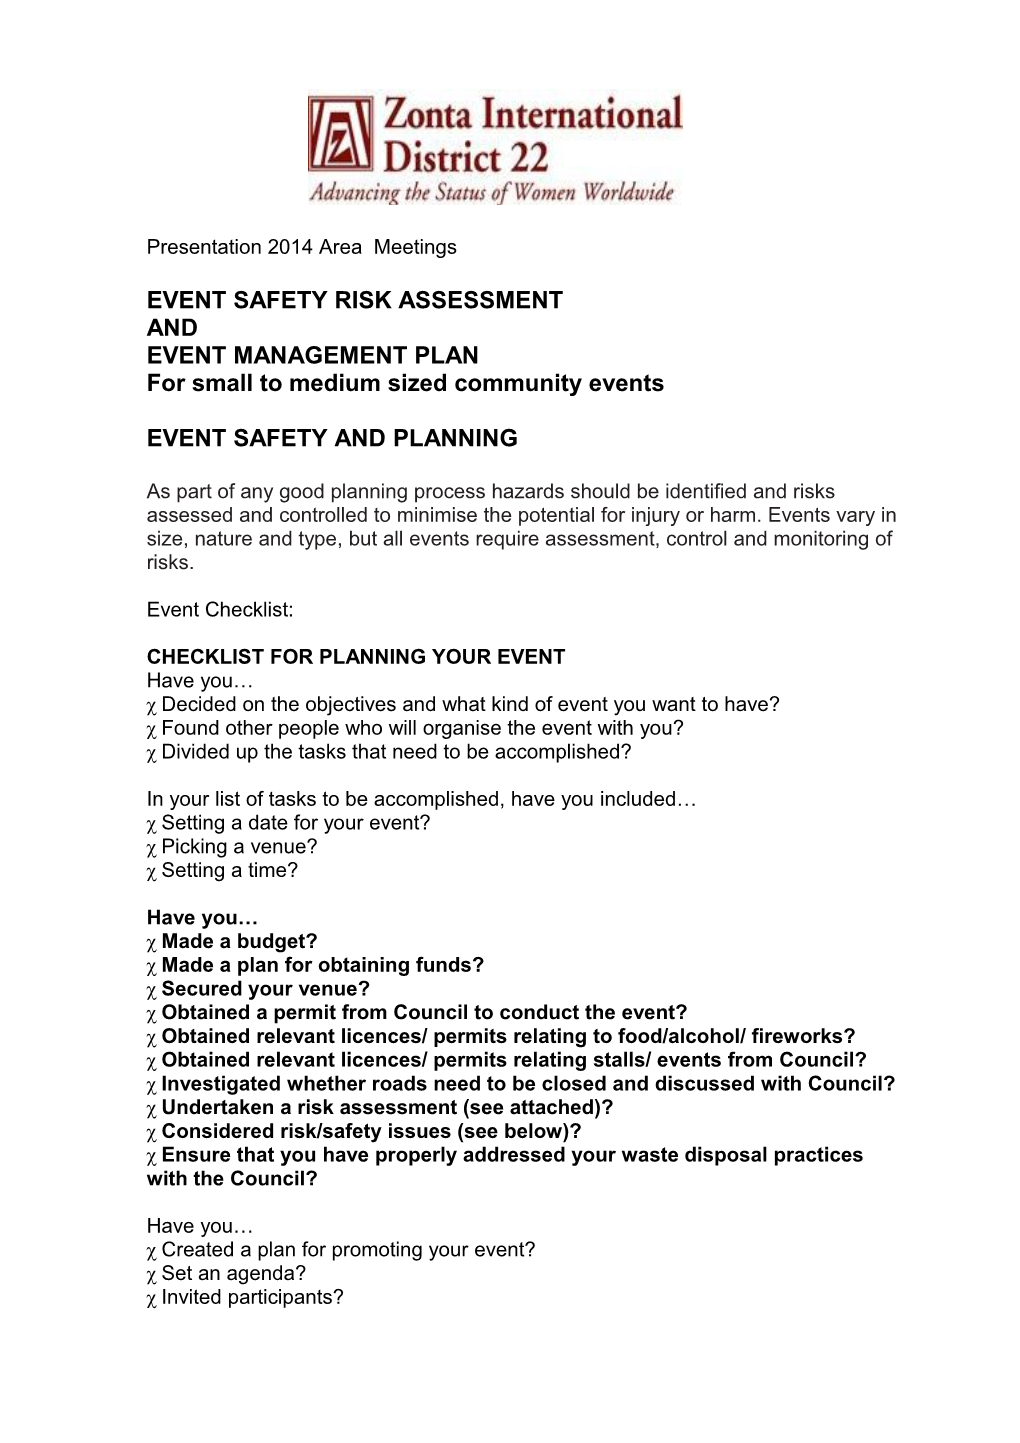 Event Safety Risk Assessment